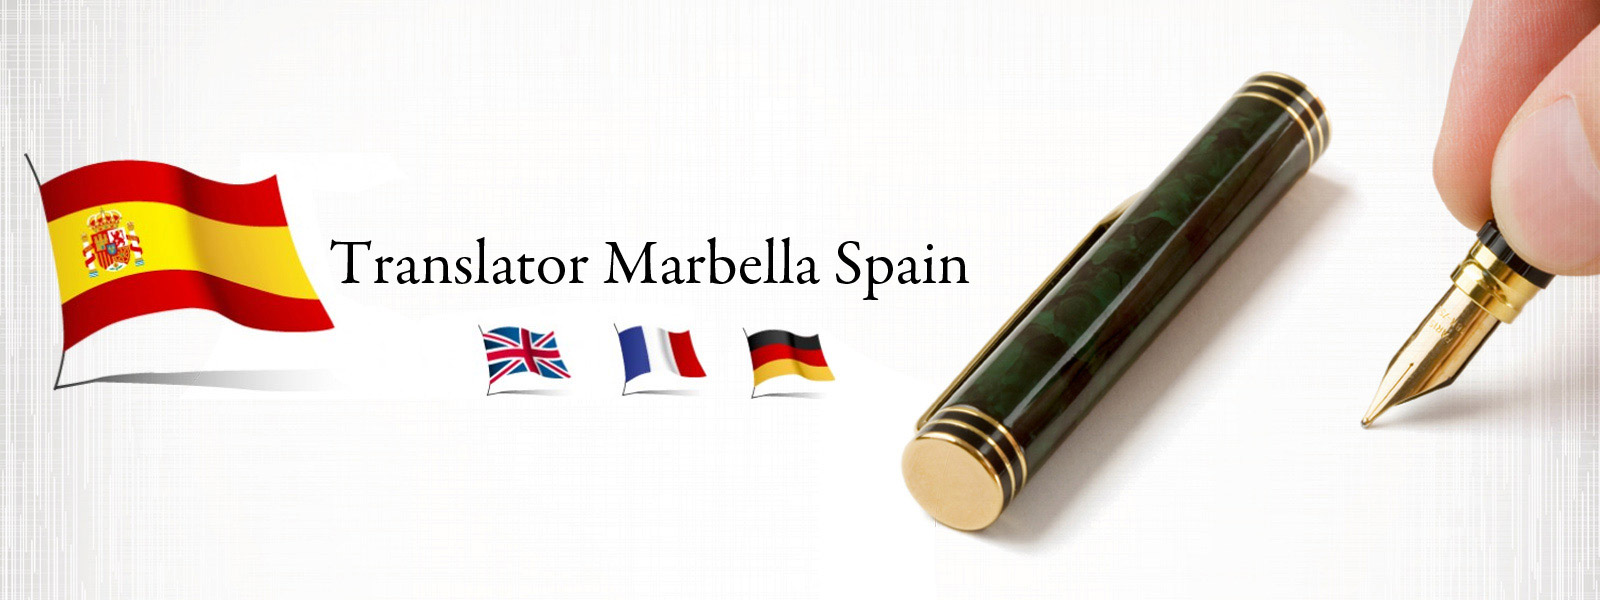 Translator Marbella Spain